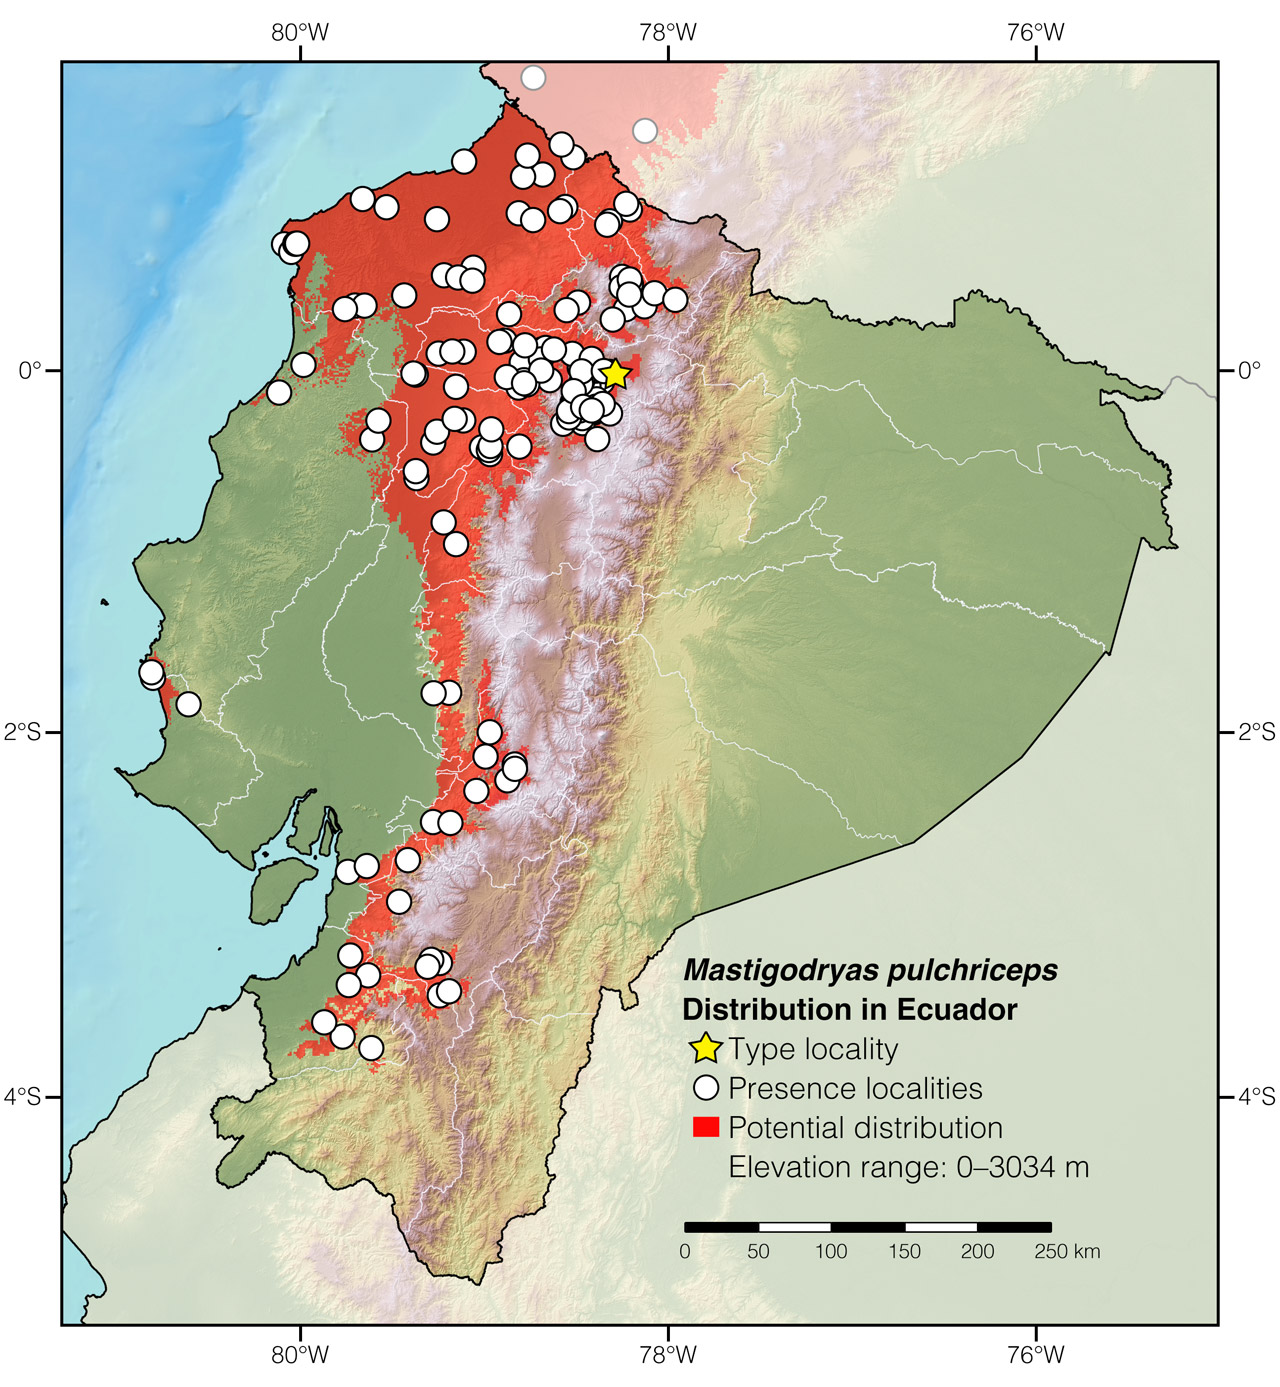 Distribution of Mastigodryas pulchriceps in Ecuador